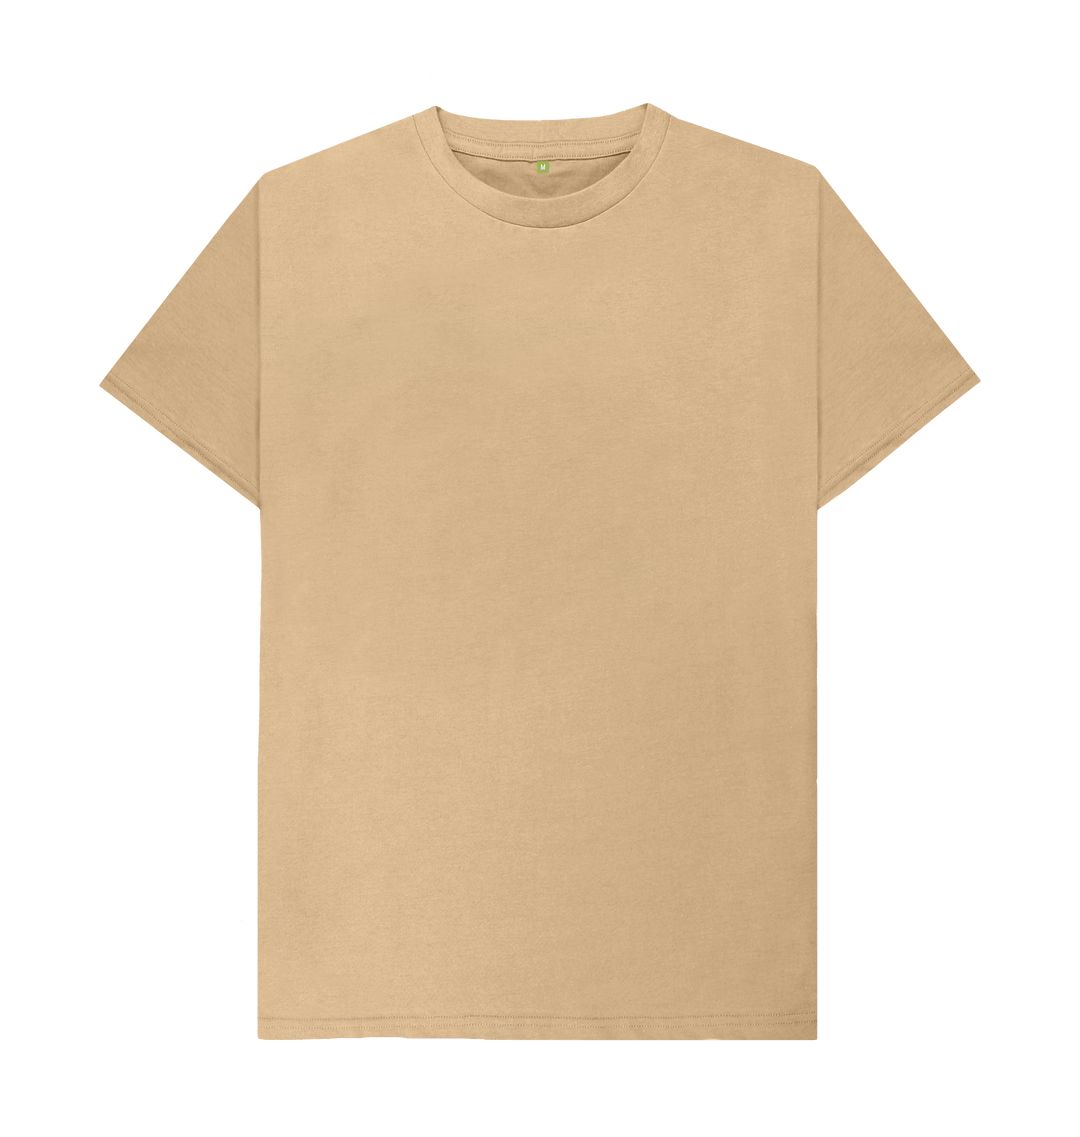 Sand Men's organic cotton t-shirt